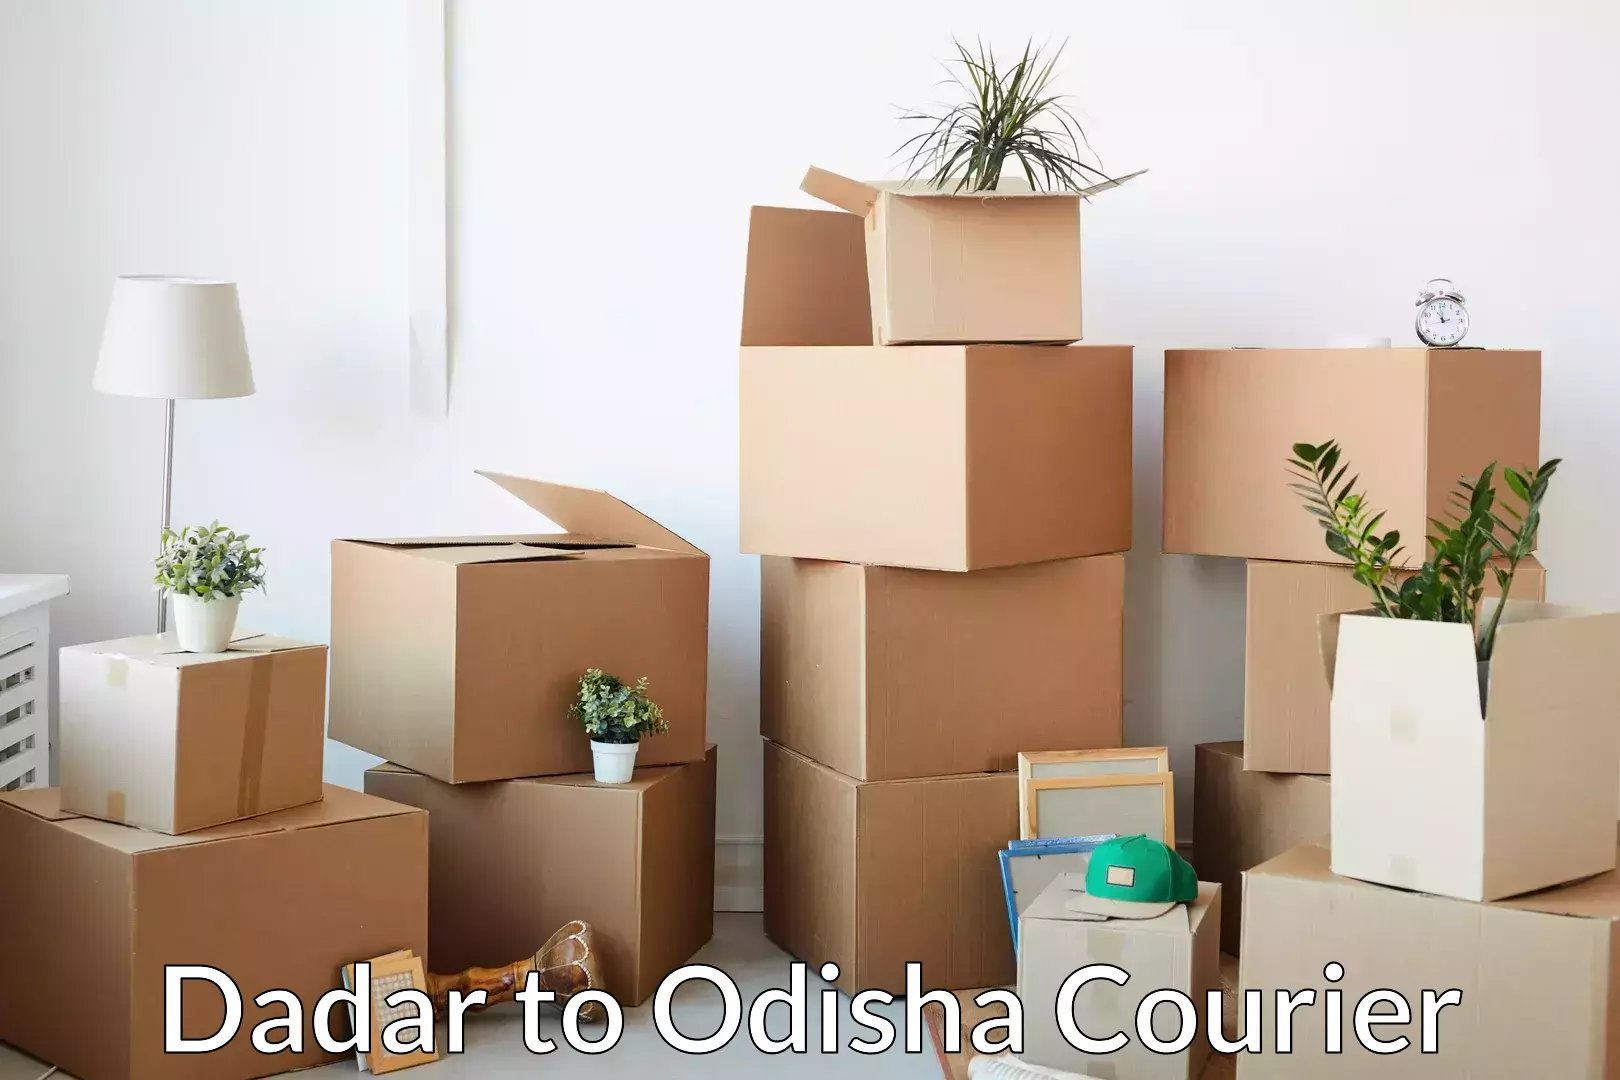 Professional moving company Dadar to Odisha